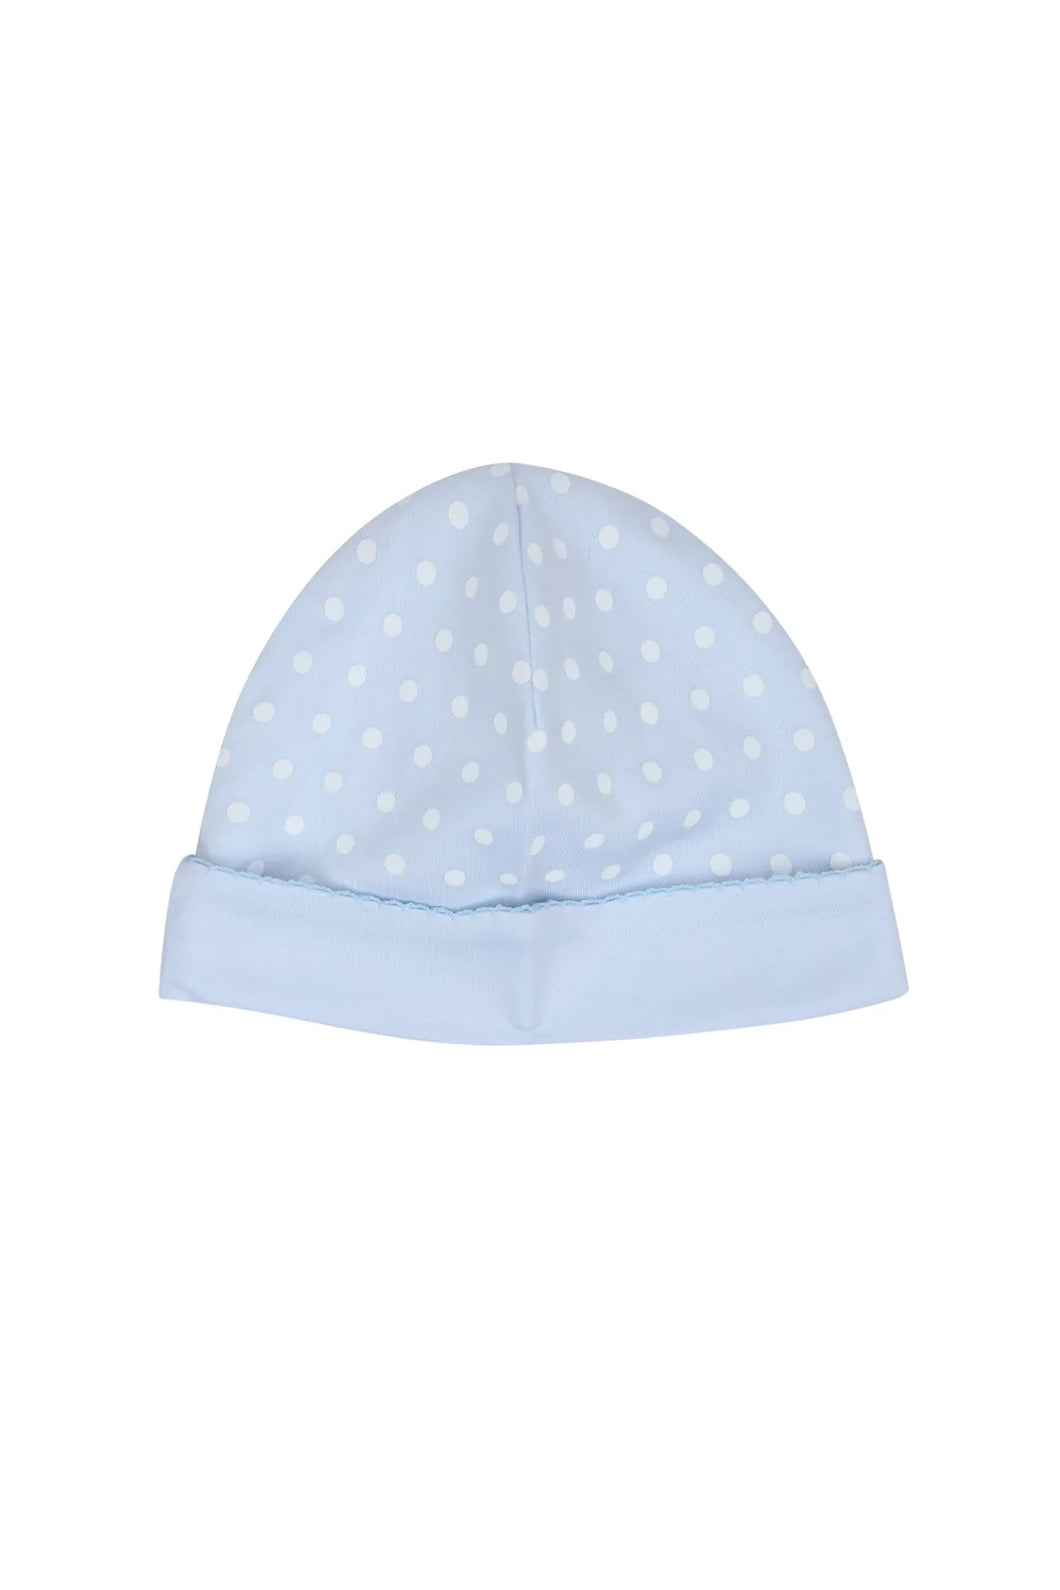 Polka Dot Baby Hat